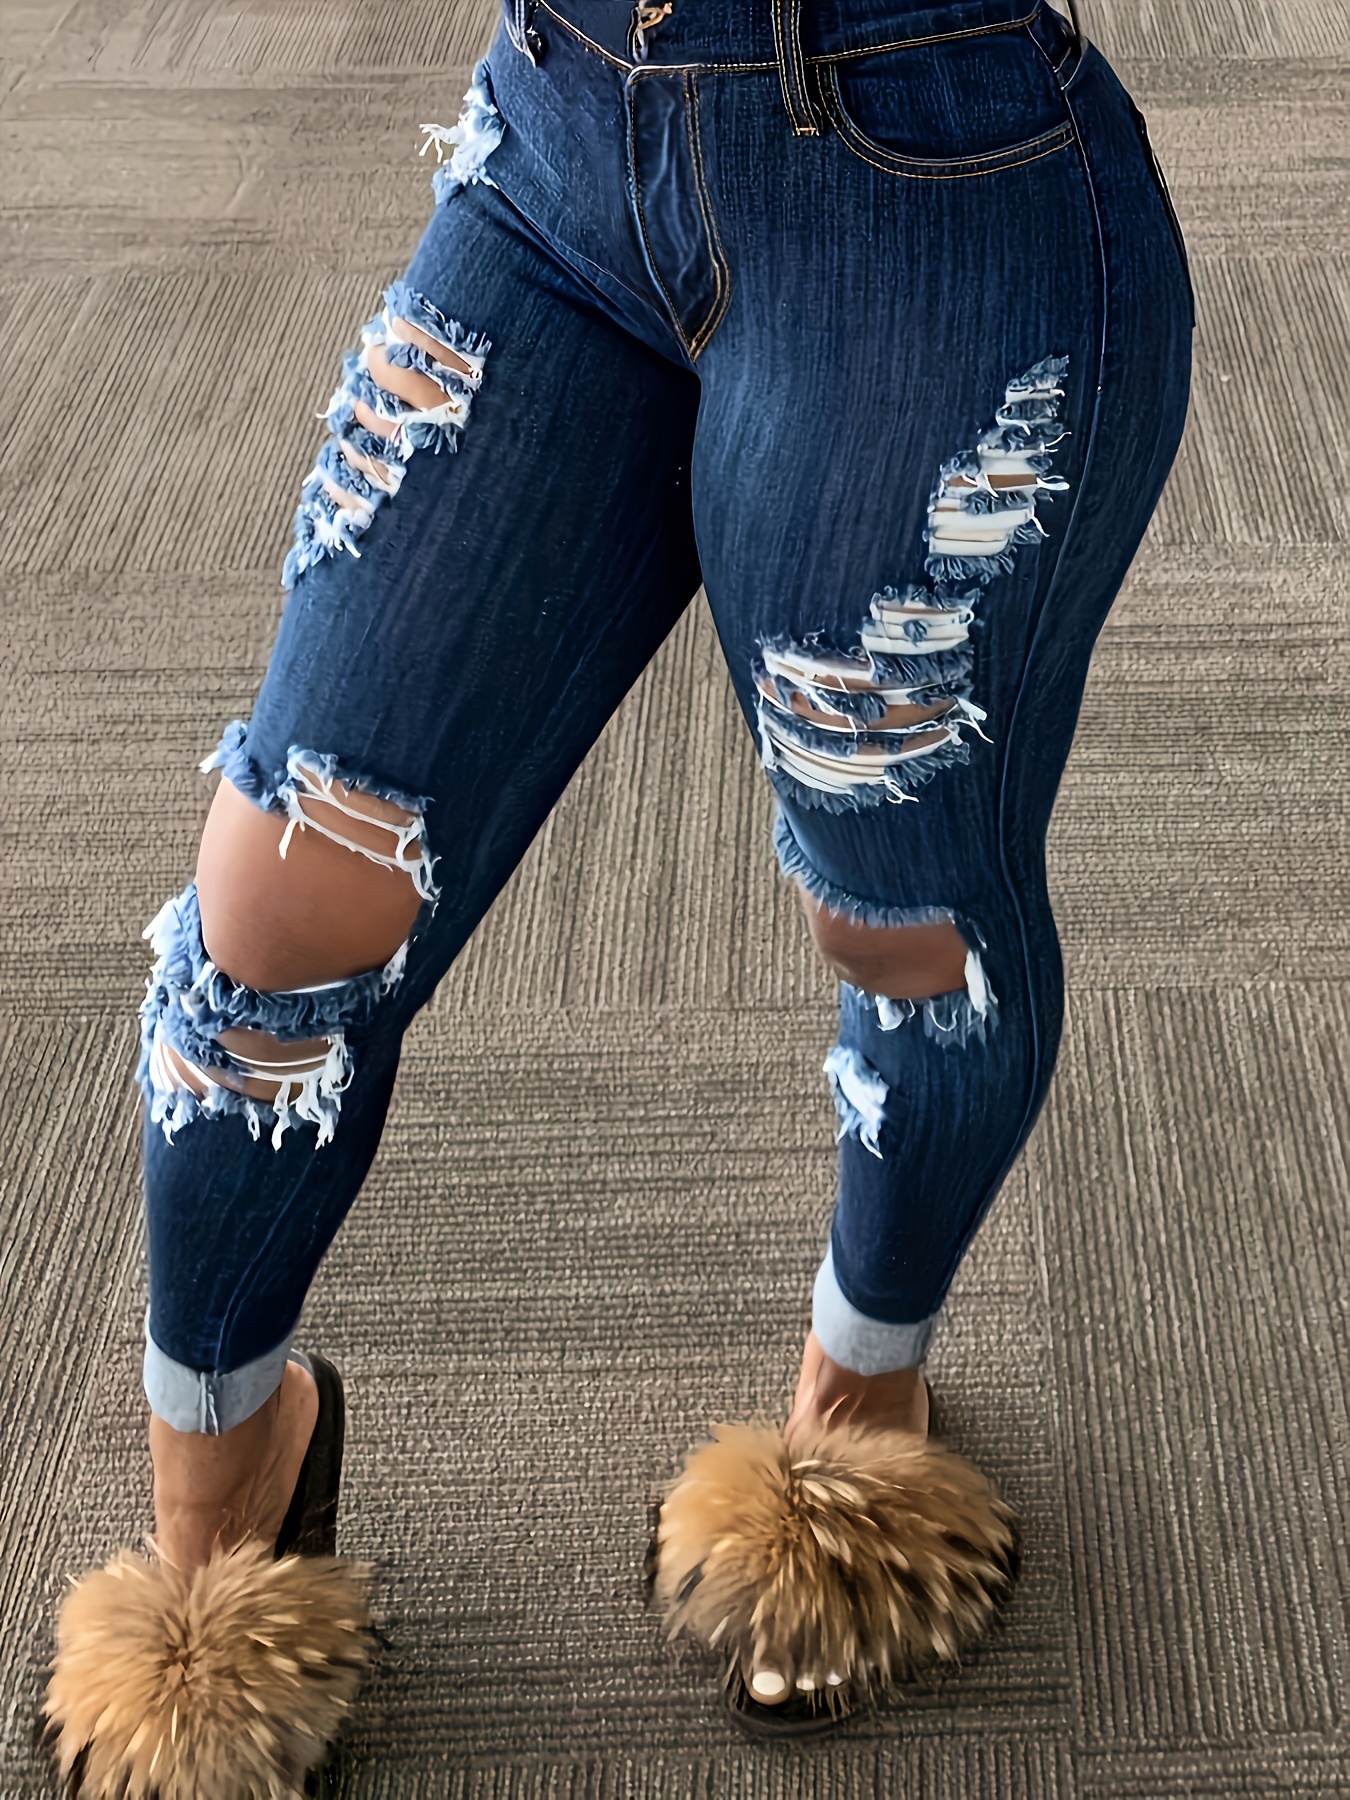  Jeans ajustados de cintura alta con agujero rasgado